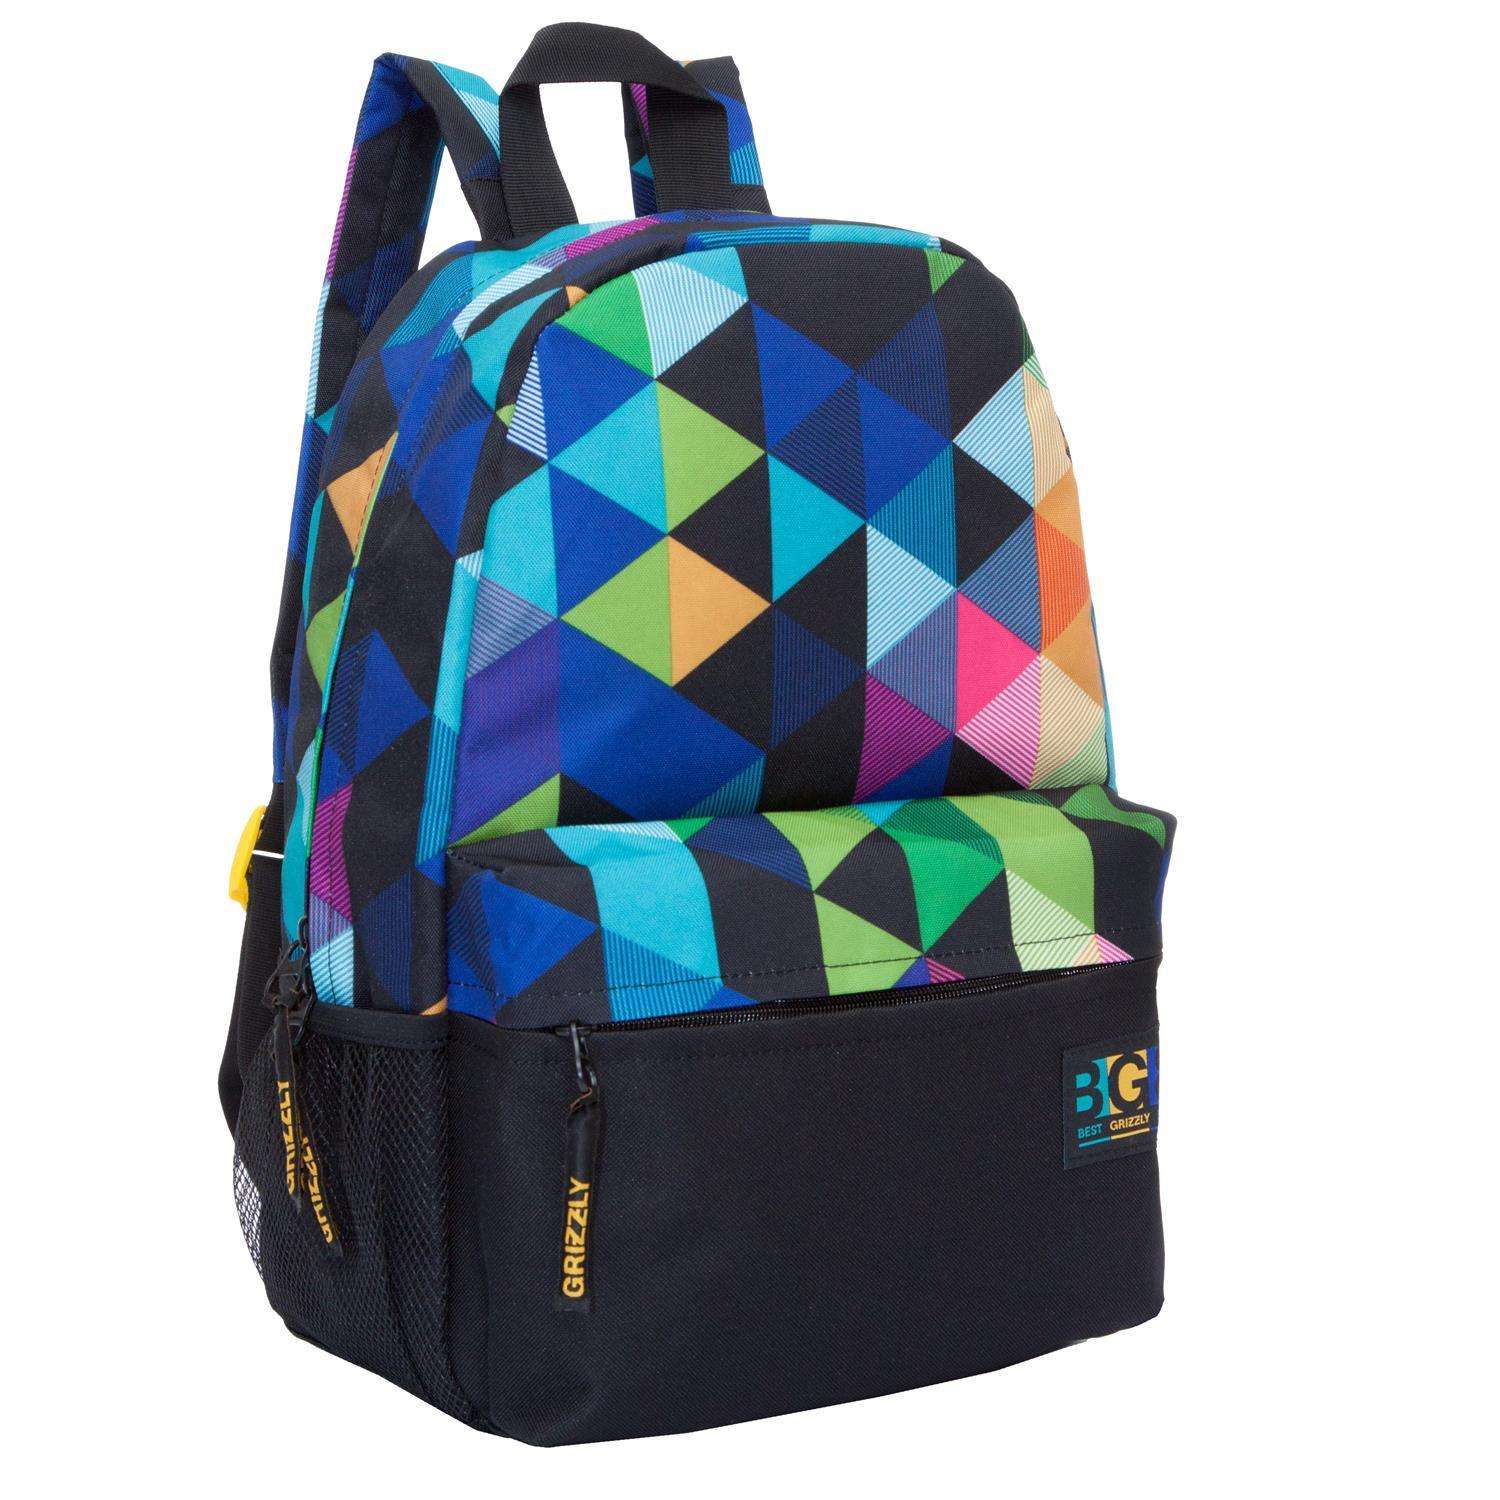 Рюкзак Grizzly для девочки разноцветная геометрия - фото 2